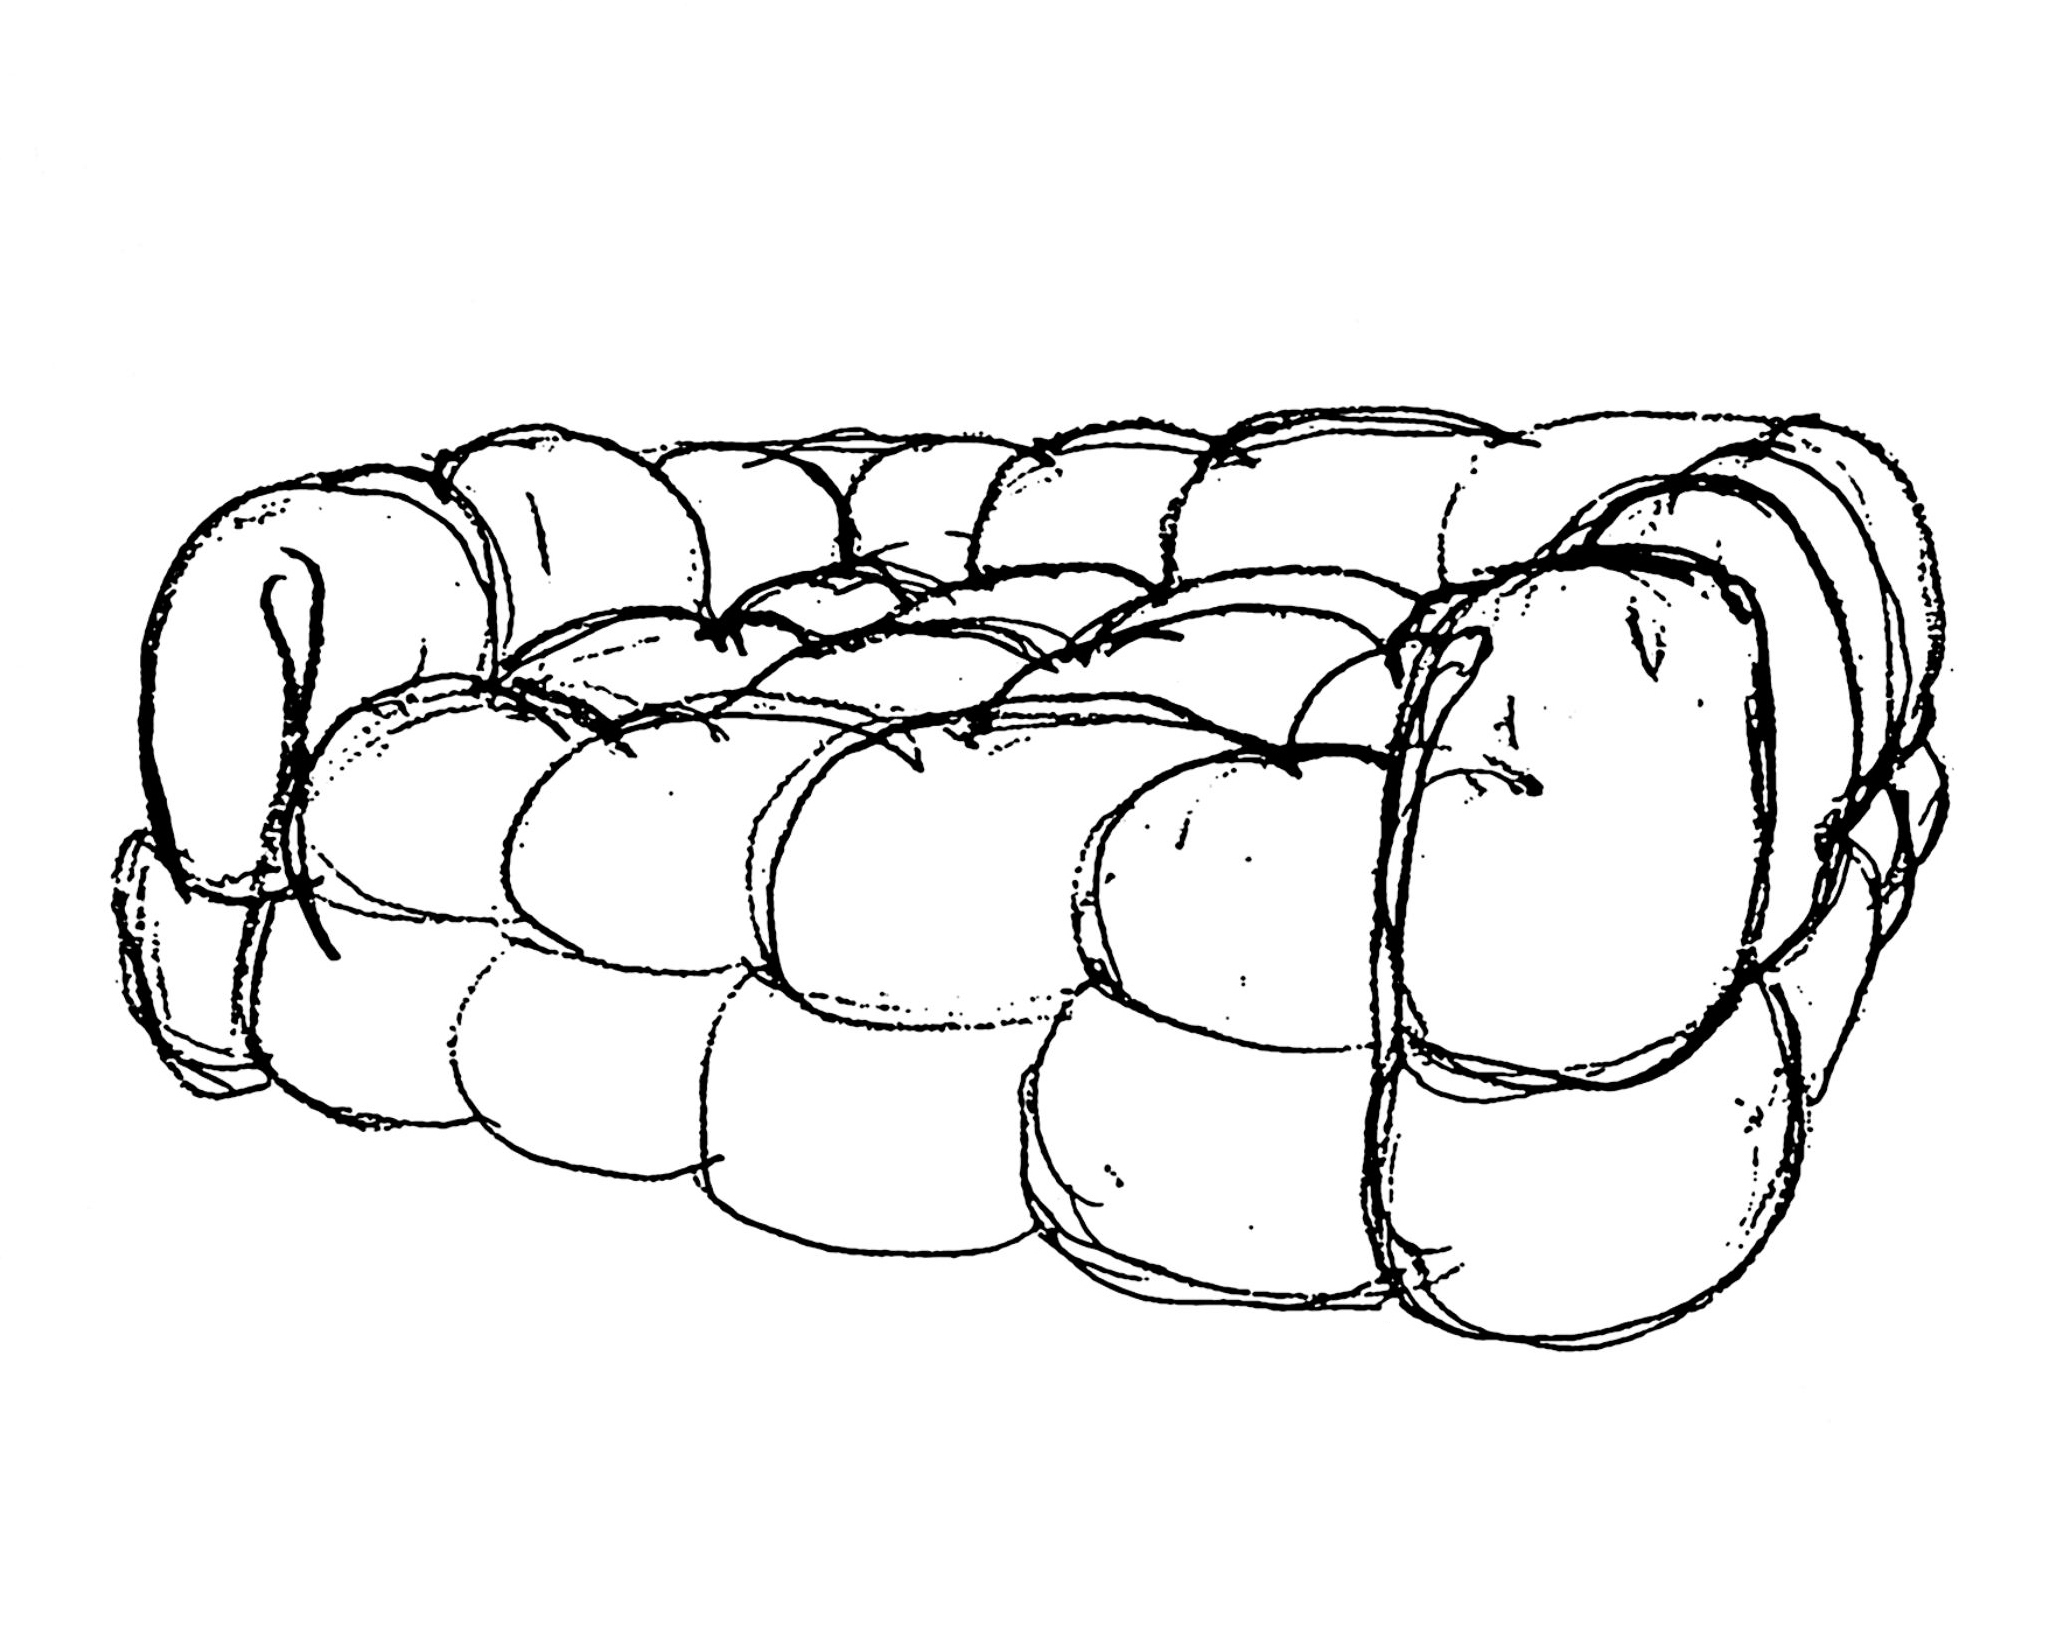 Strips Modular Sofa (Sketch). Designed by Cini Boeri for artflex, 1968. © Loro Piana.